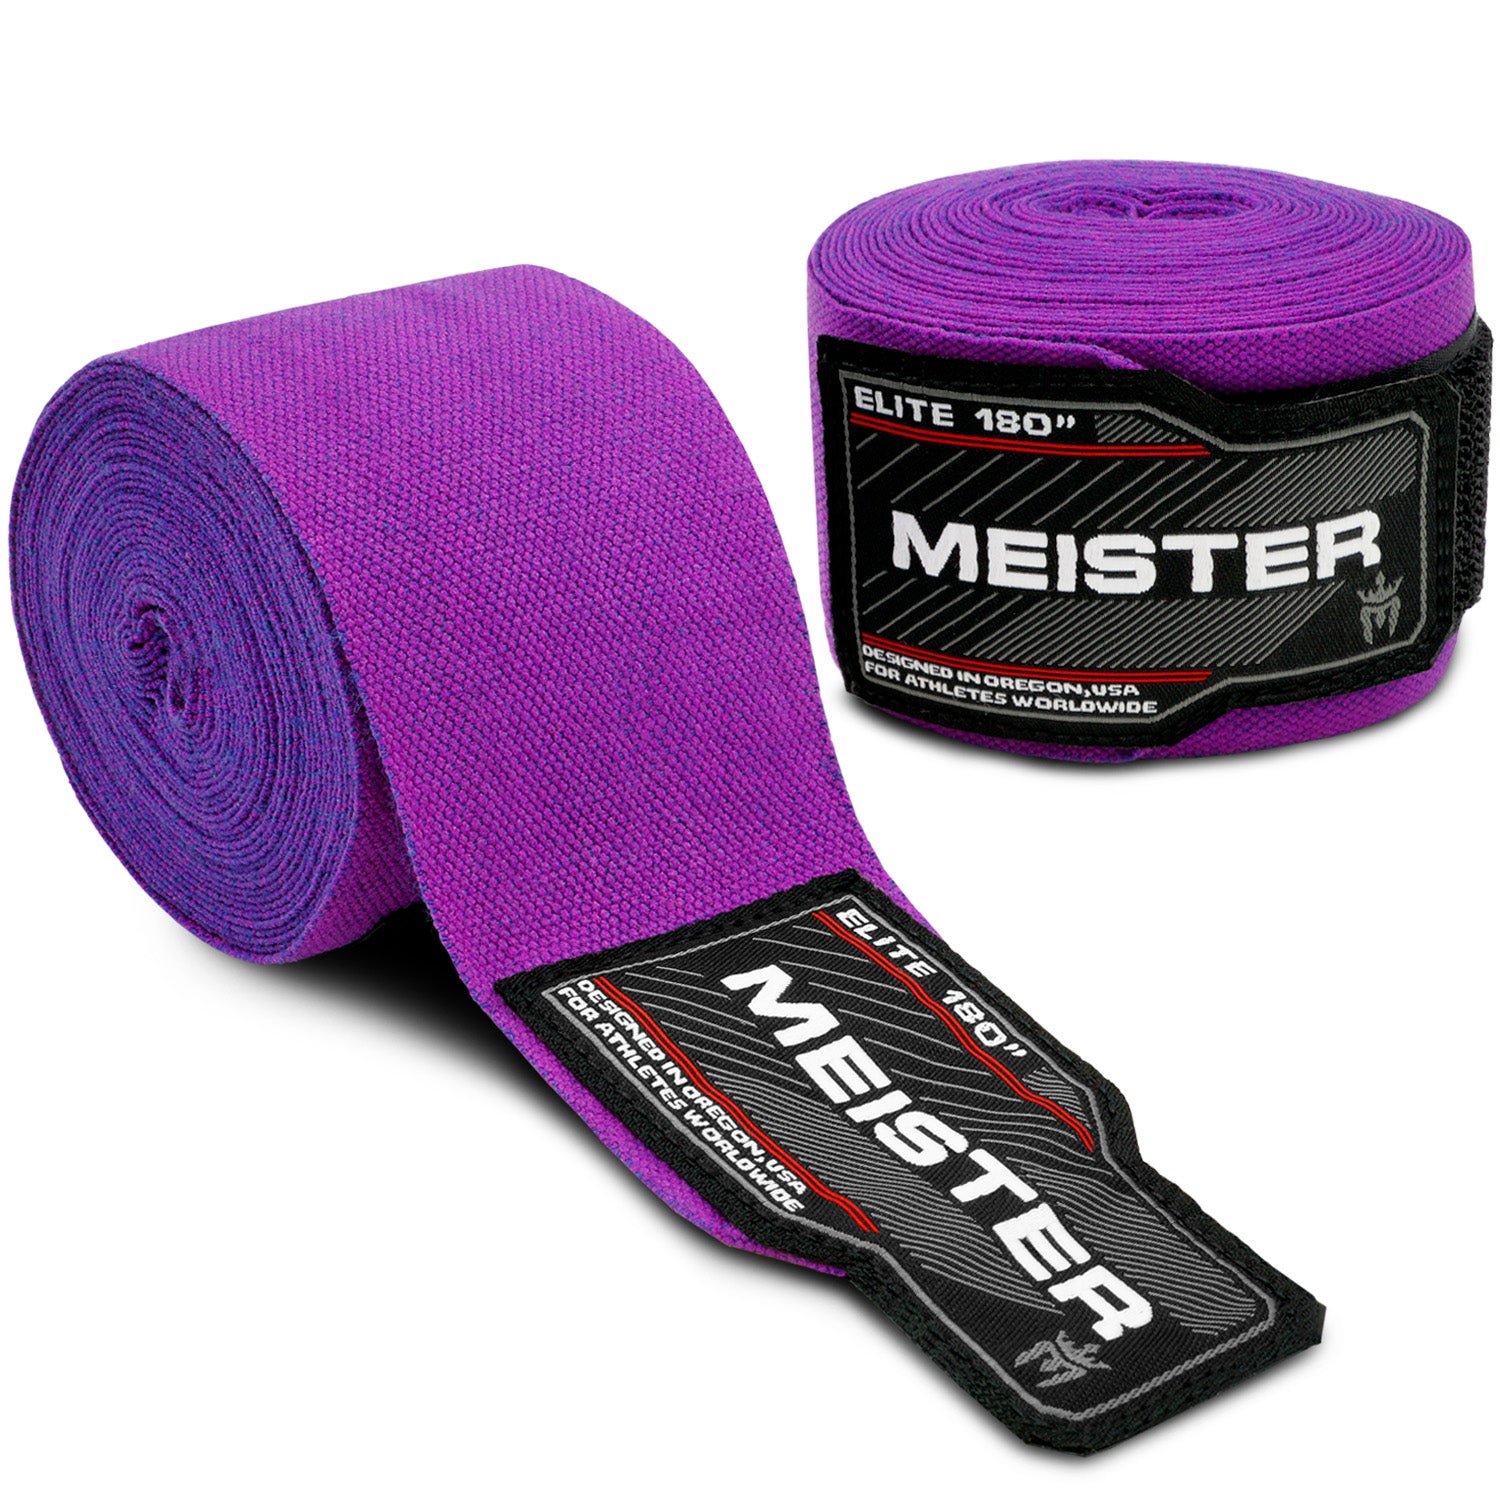 Meister ELITE 180" Elastic Hand Wraps - Royal Purple